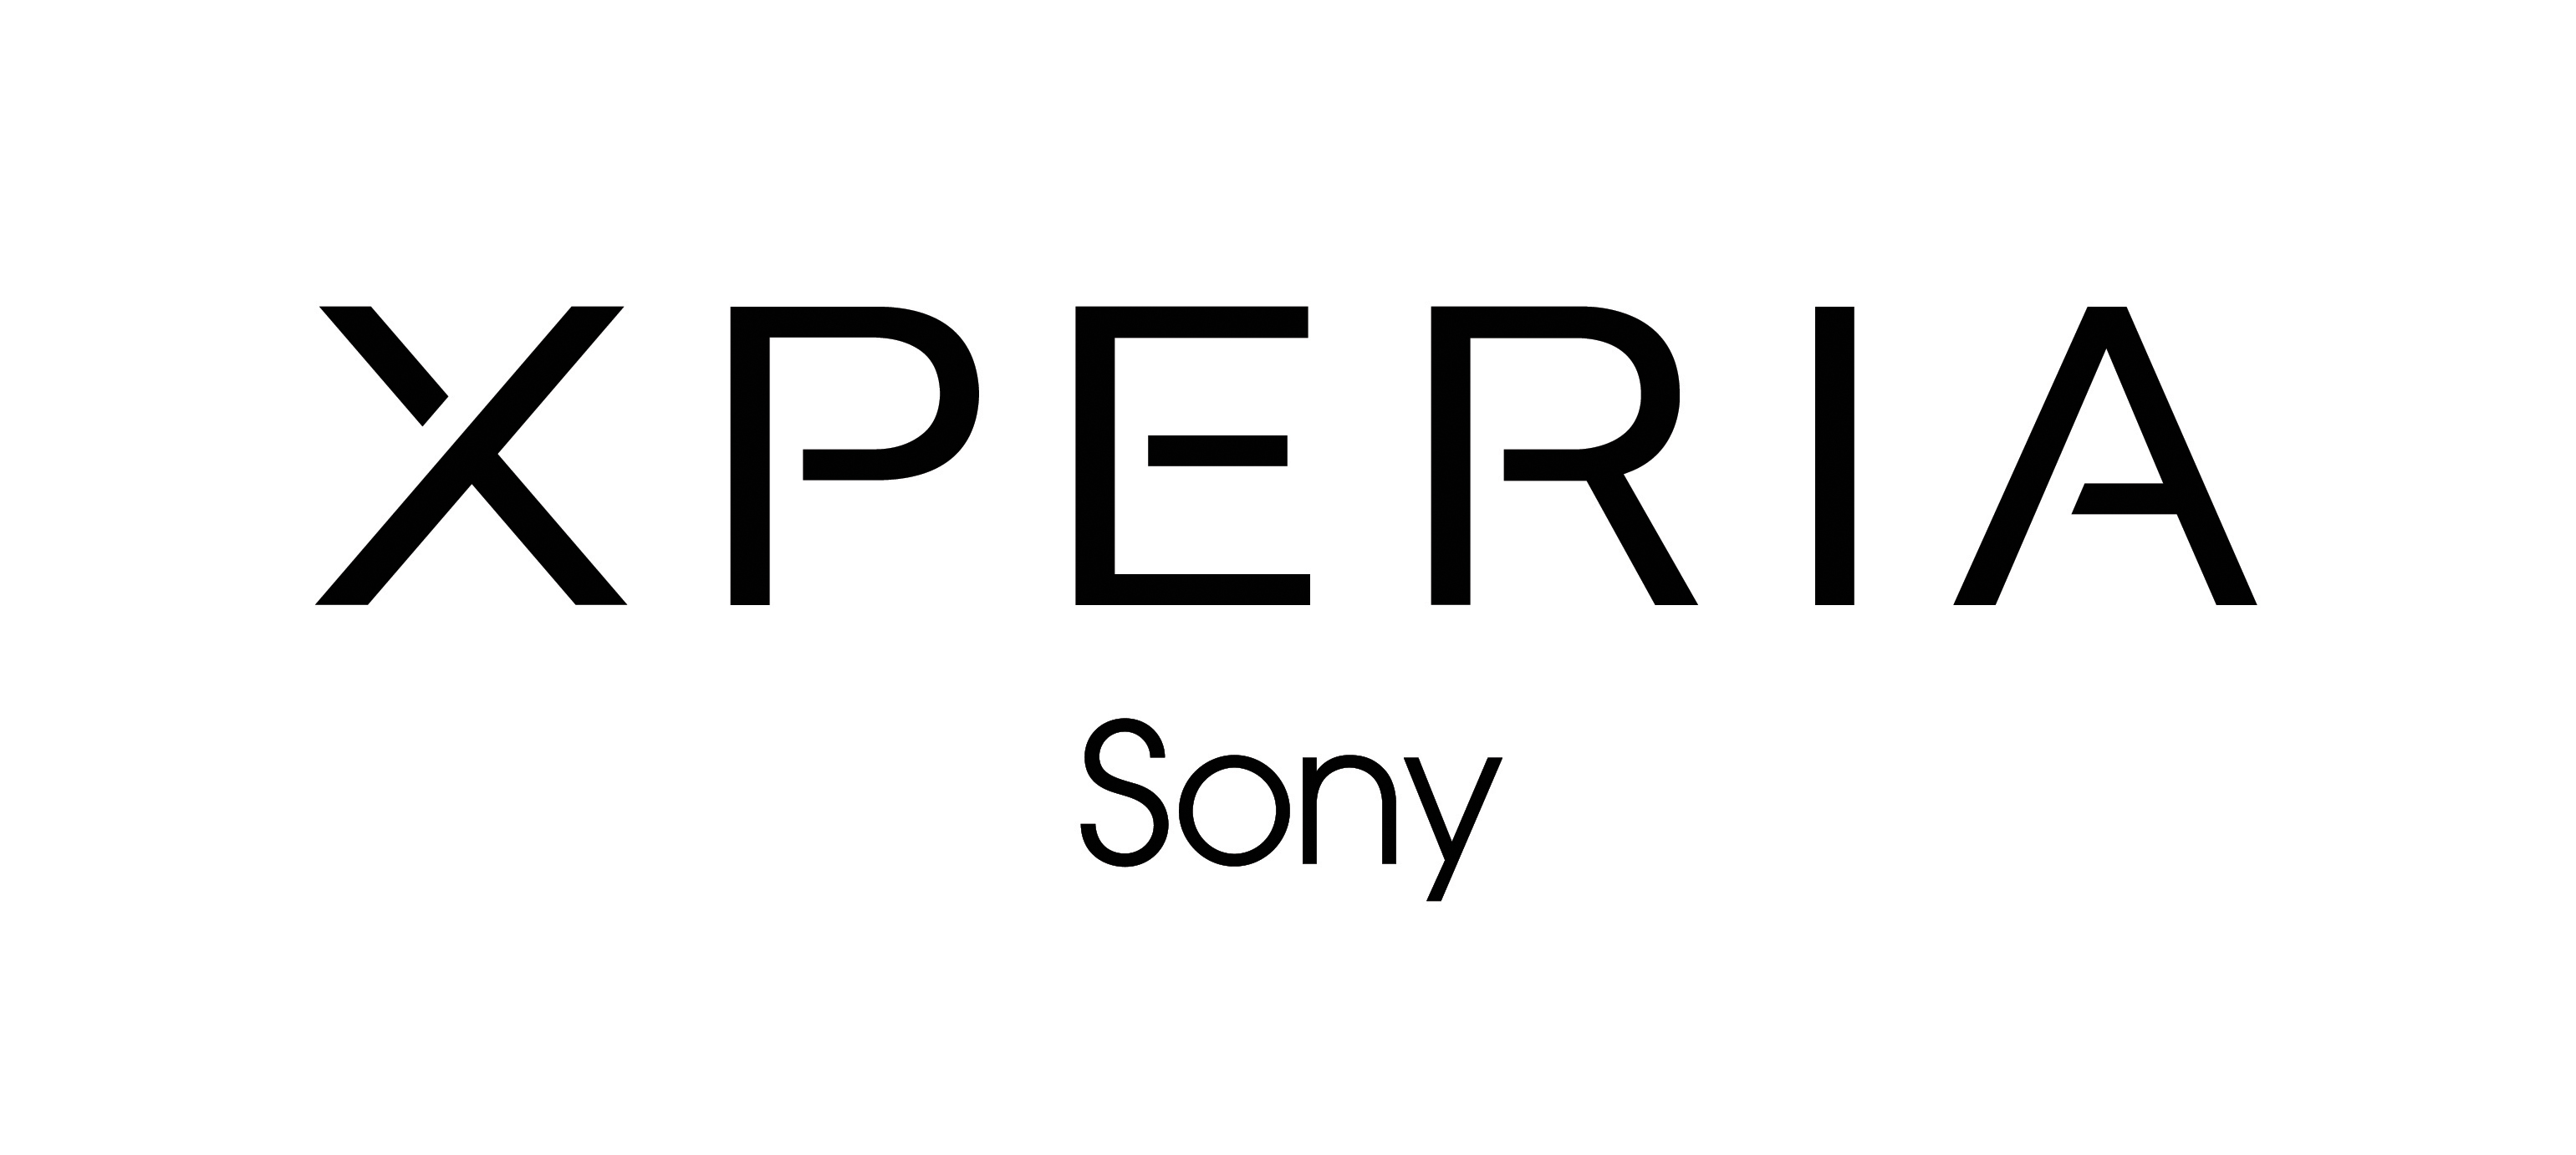 Sony-Xperia-2013